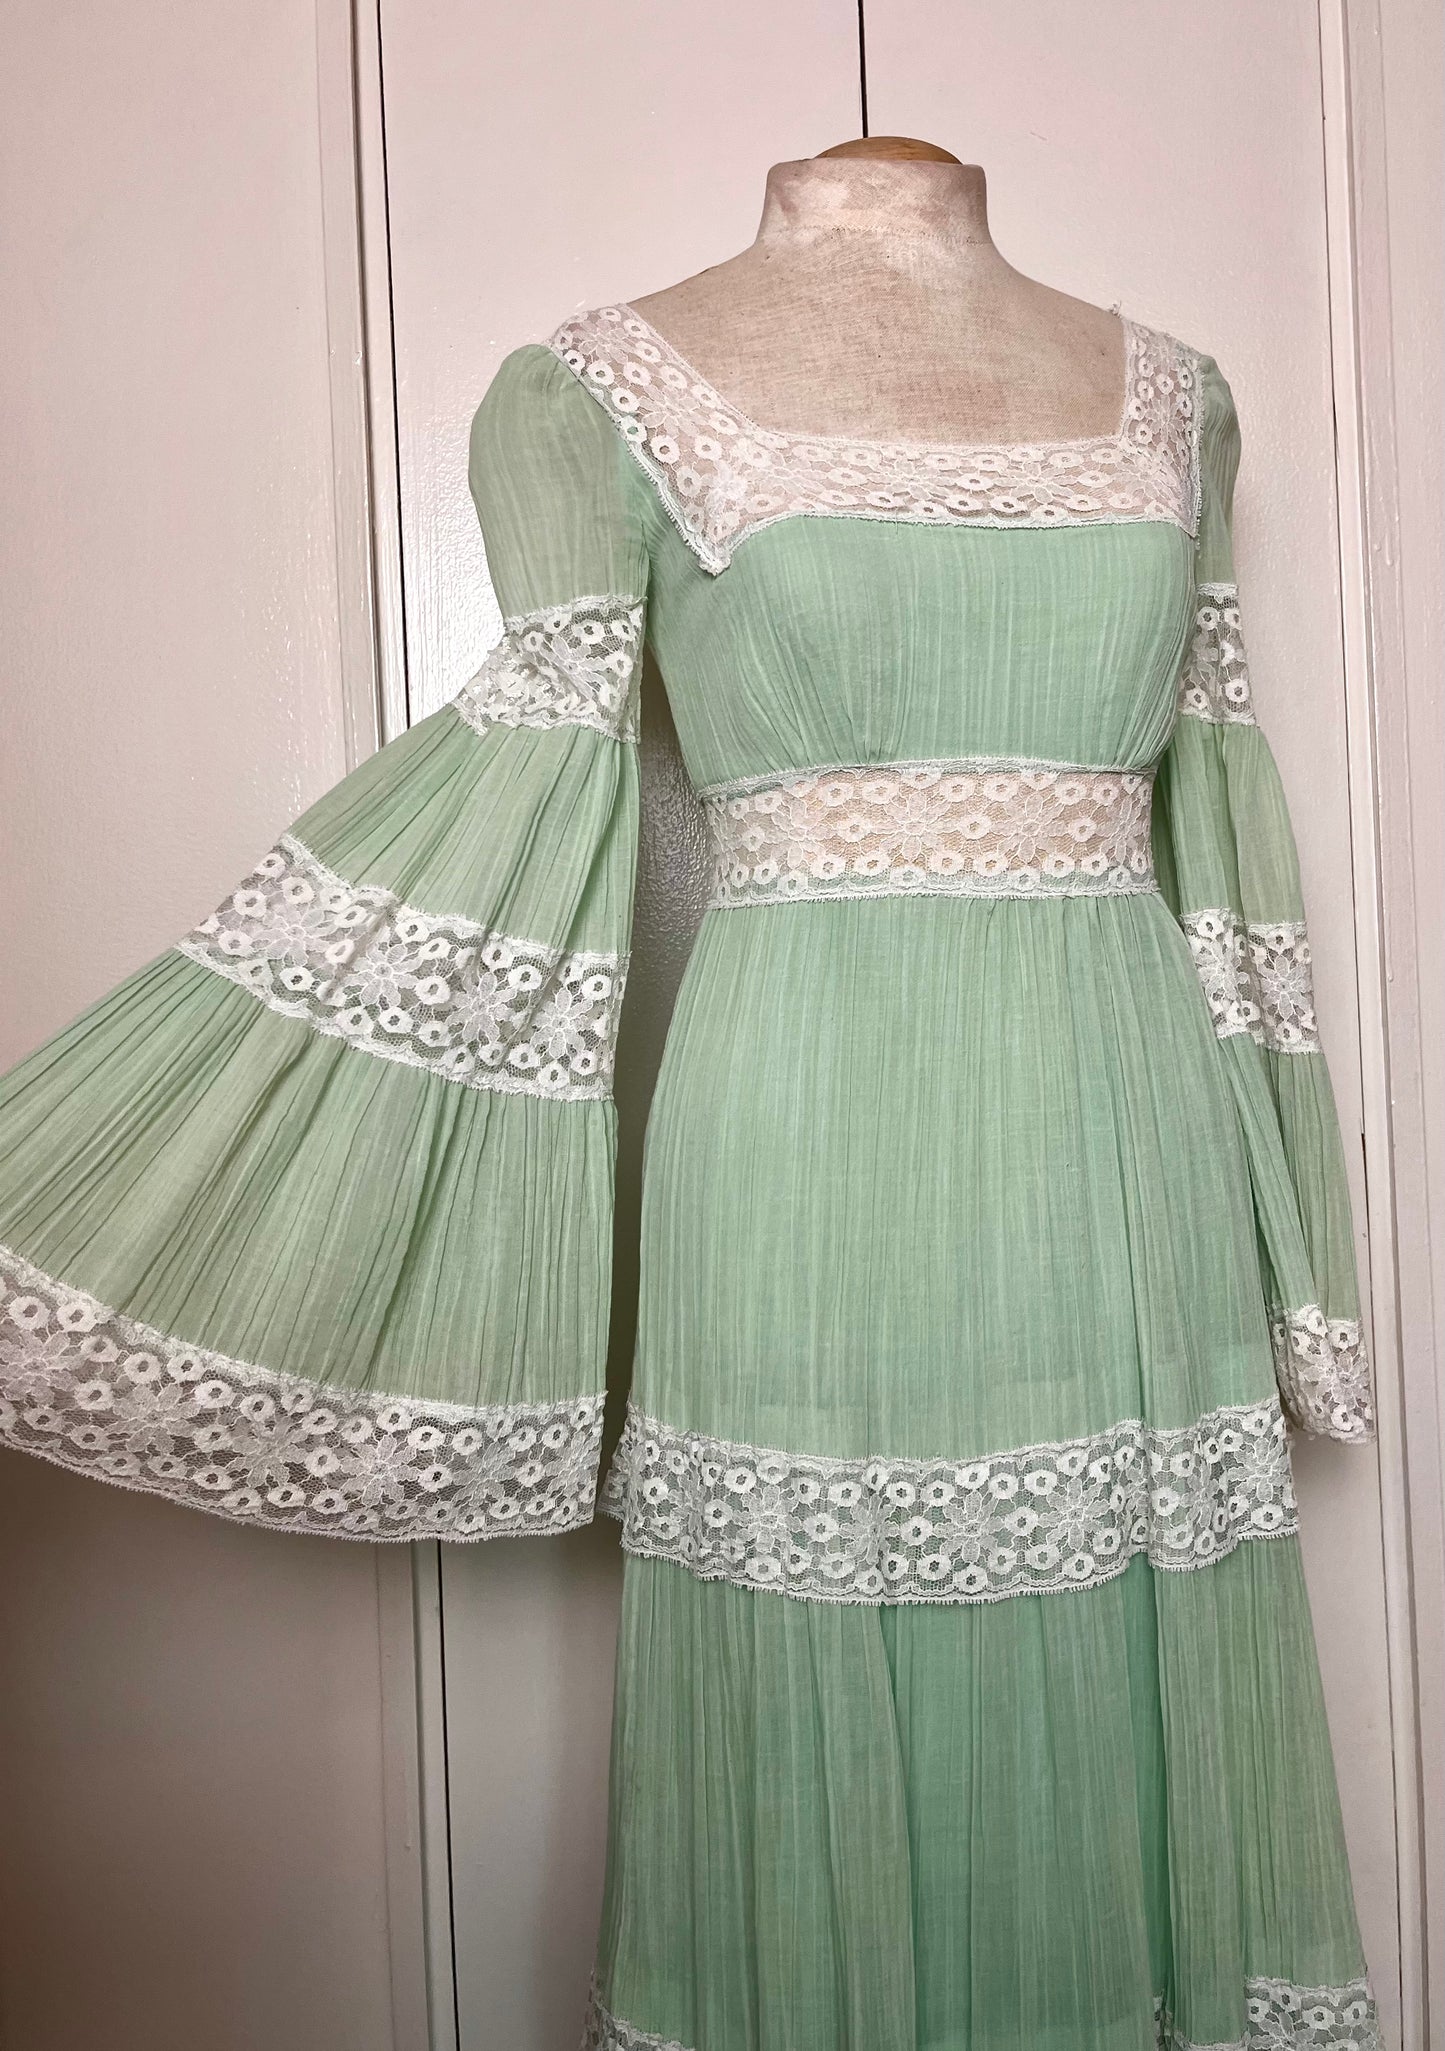 Vintage 1970's "Roberta" Green Prairie Dress